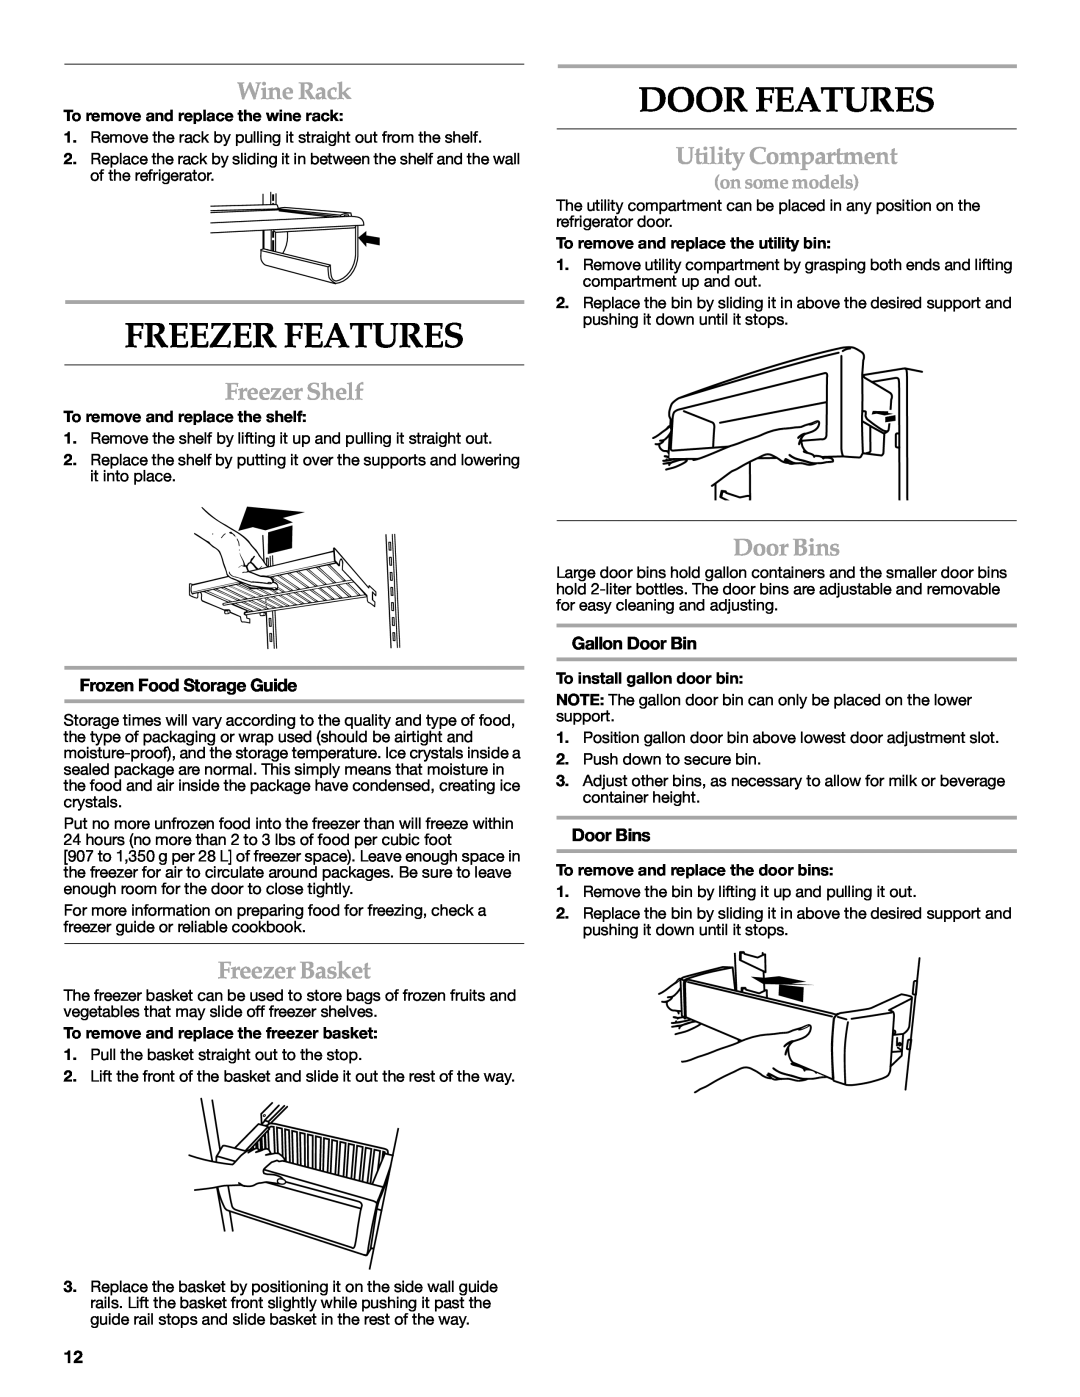 KitchenAid KSSC48QVS manual Freezer Features, Door Features, Wine Rack, Freezer Shelf, Utility Compartment, Freezer Basket 